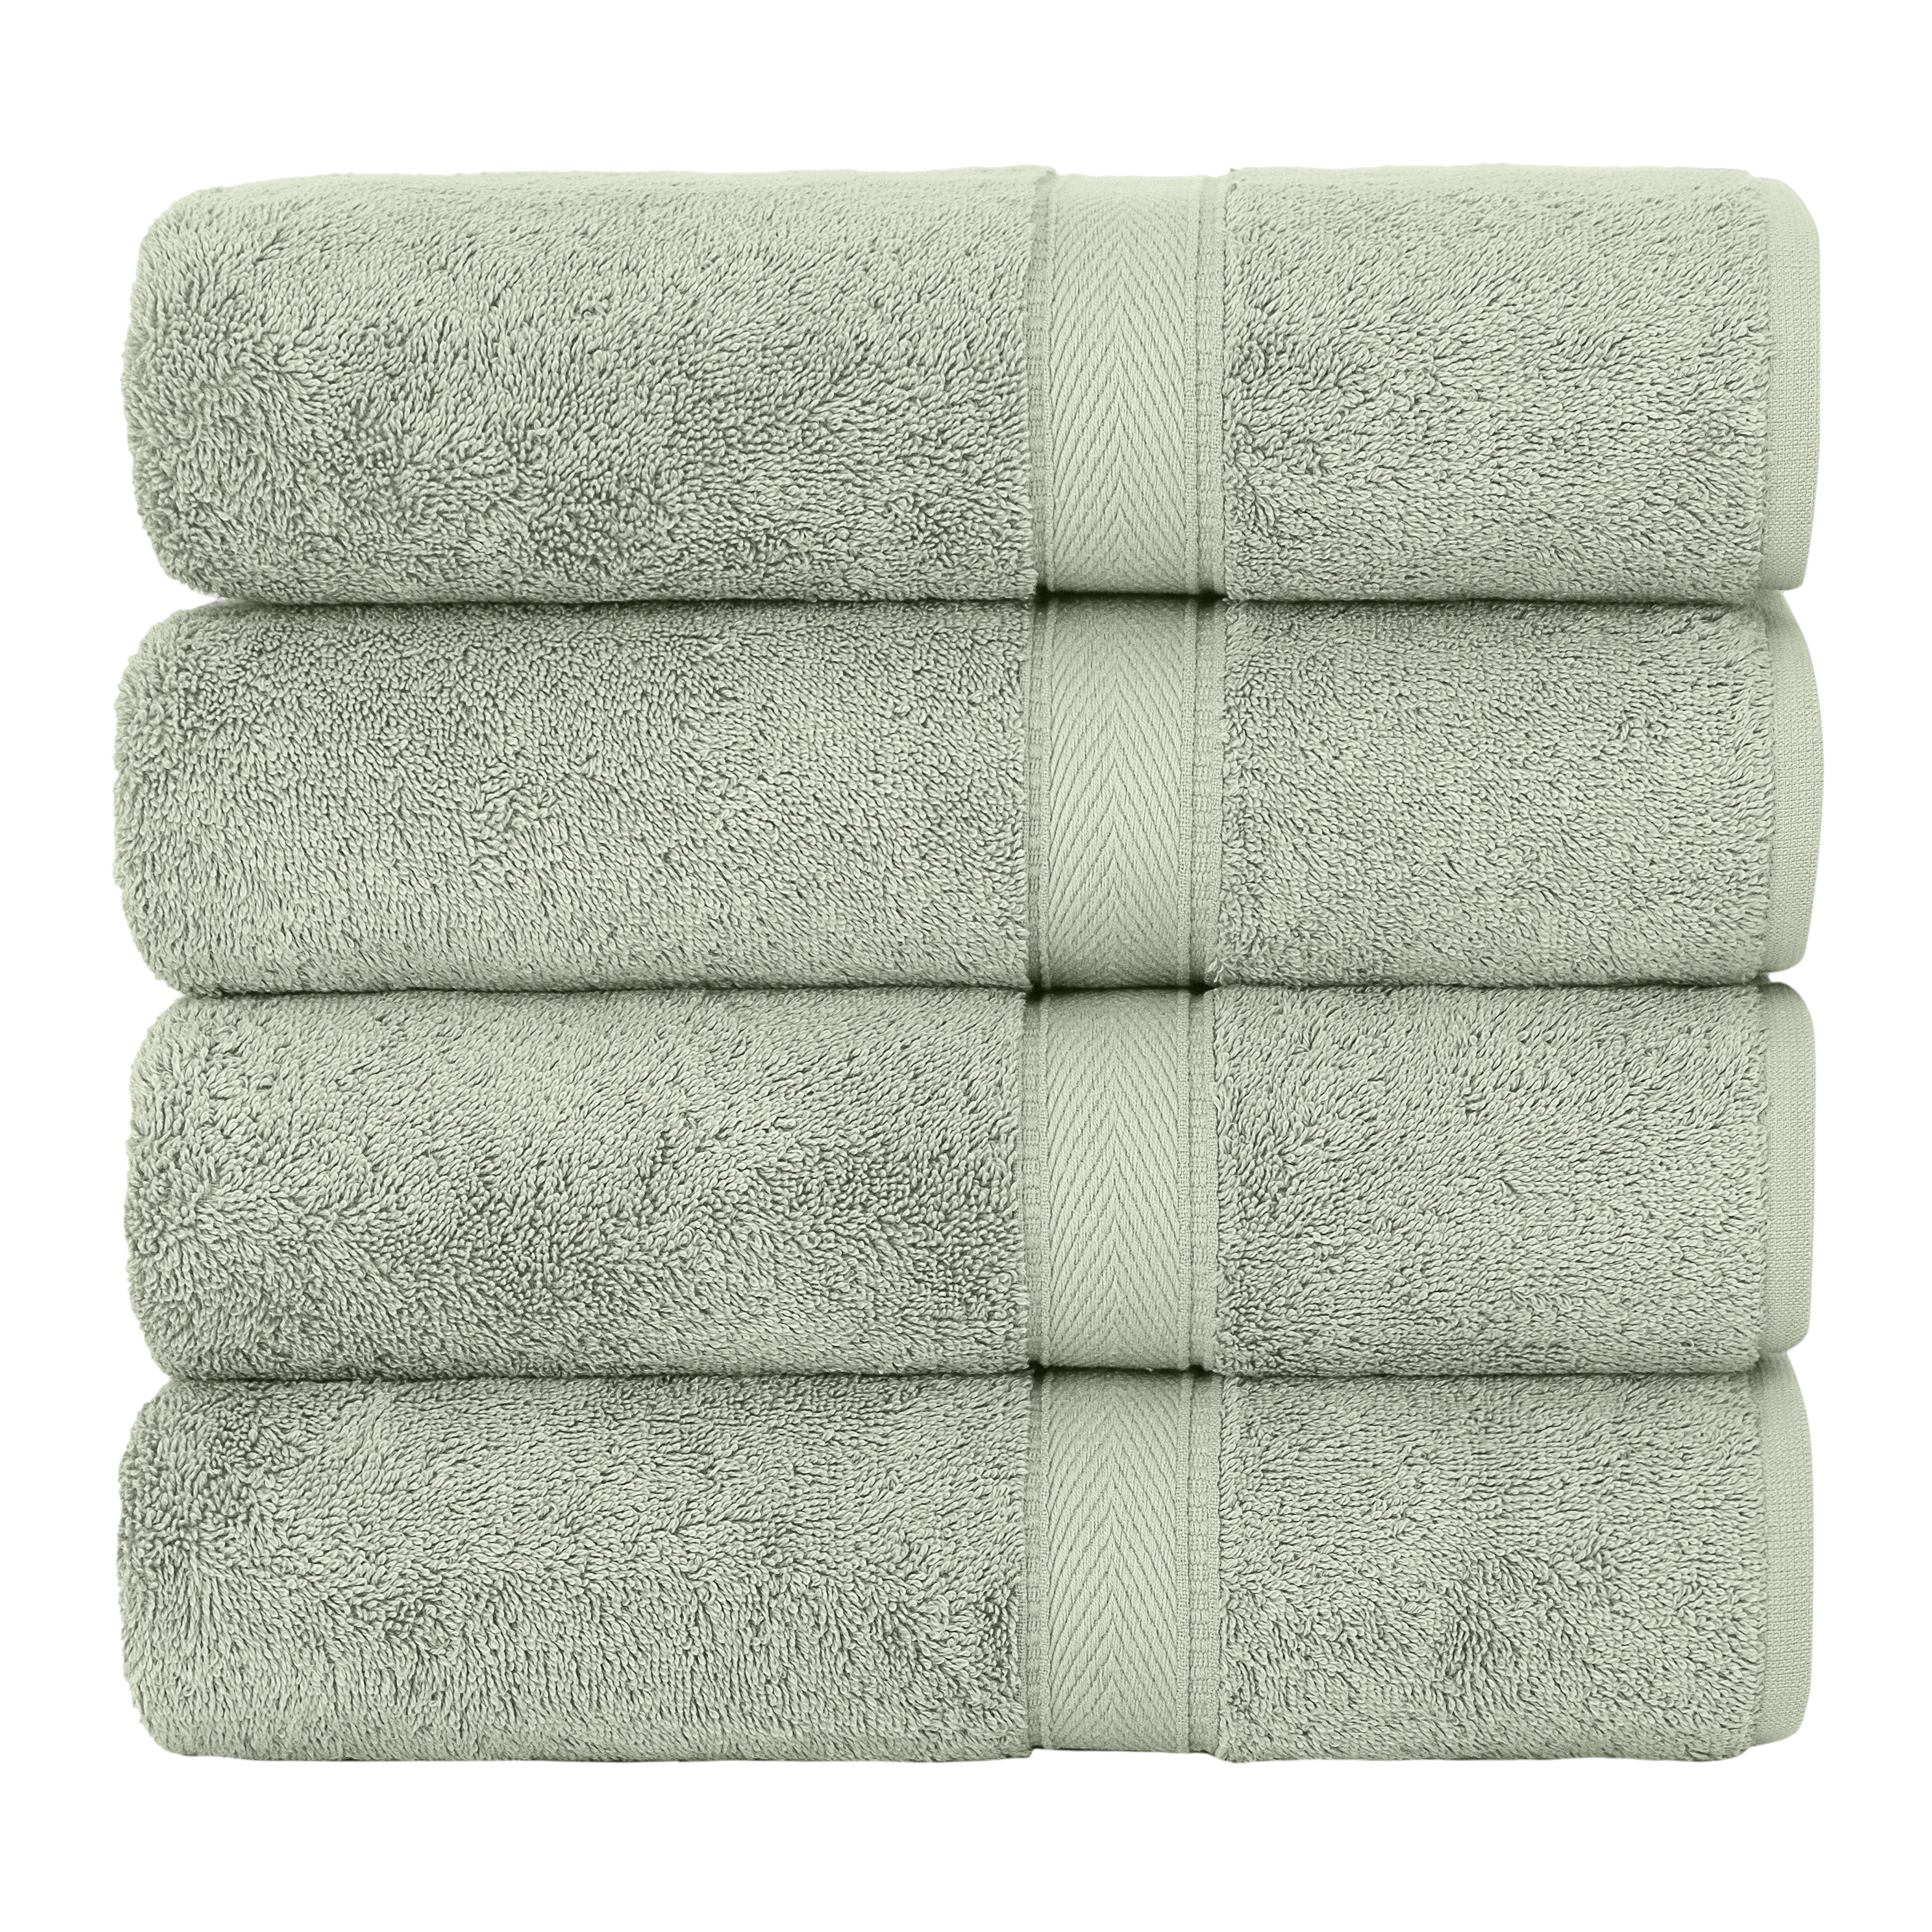 Hotel & Spa Towels, Organic Cotton Towels